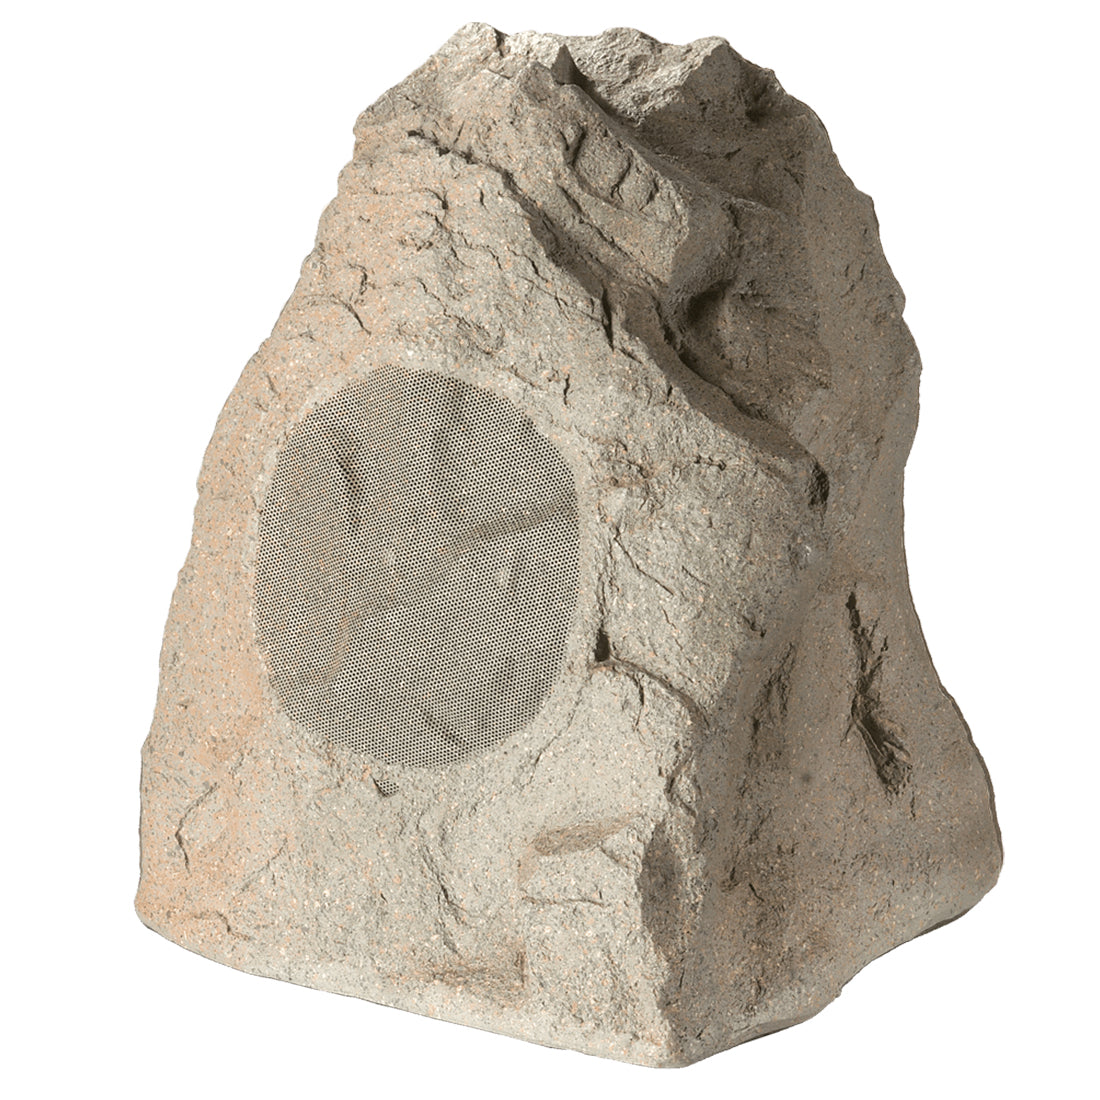 Paradigm Rock MONITOR 80-SM Fieldstone